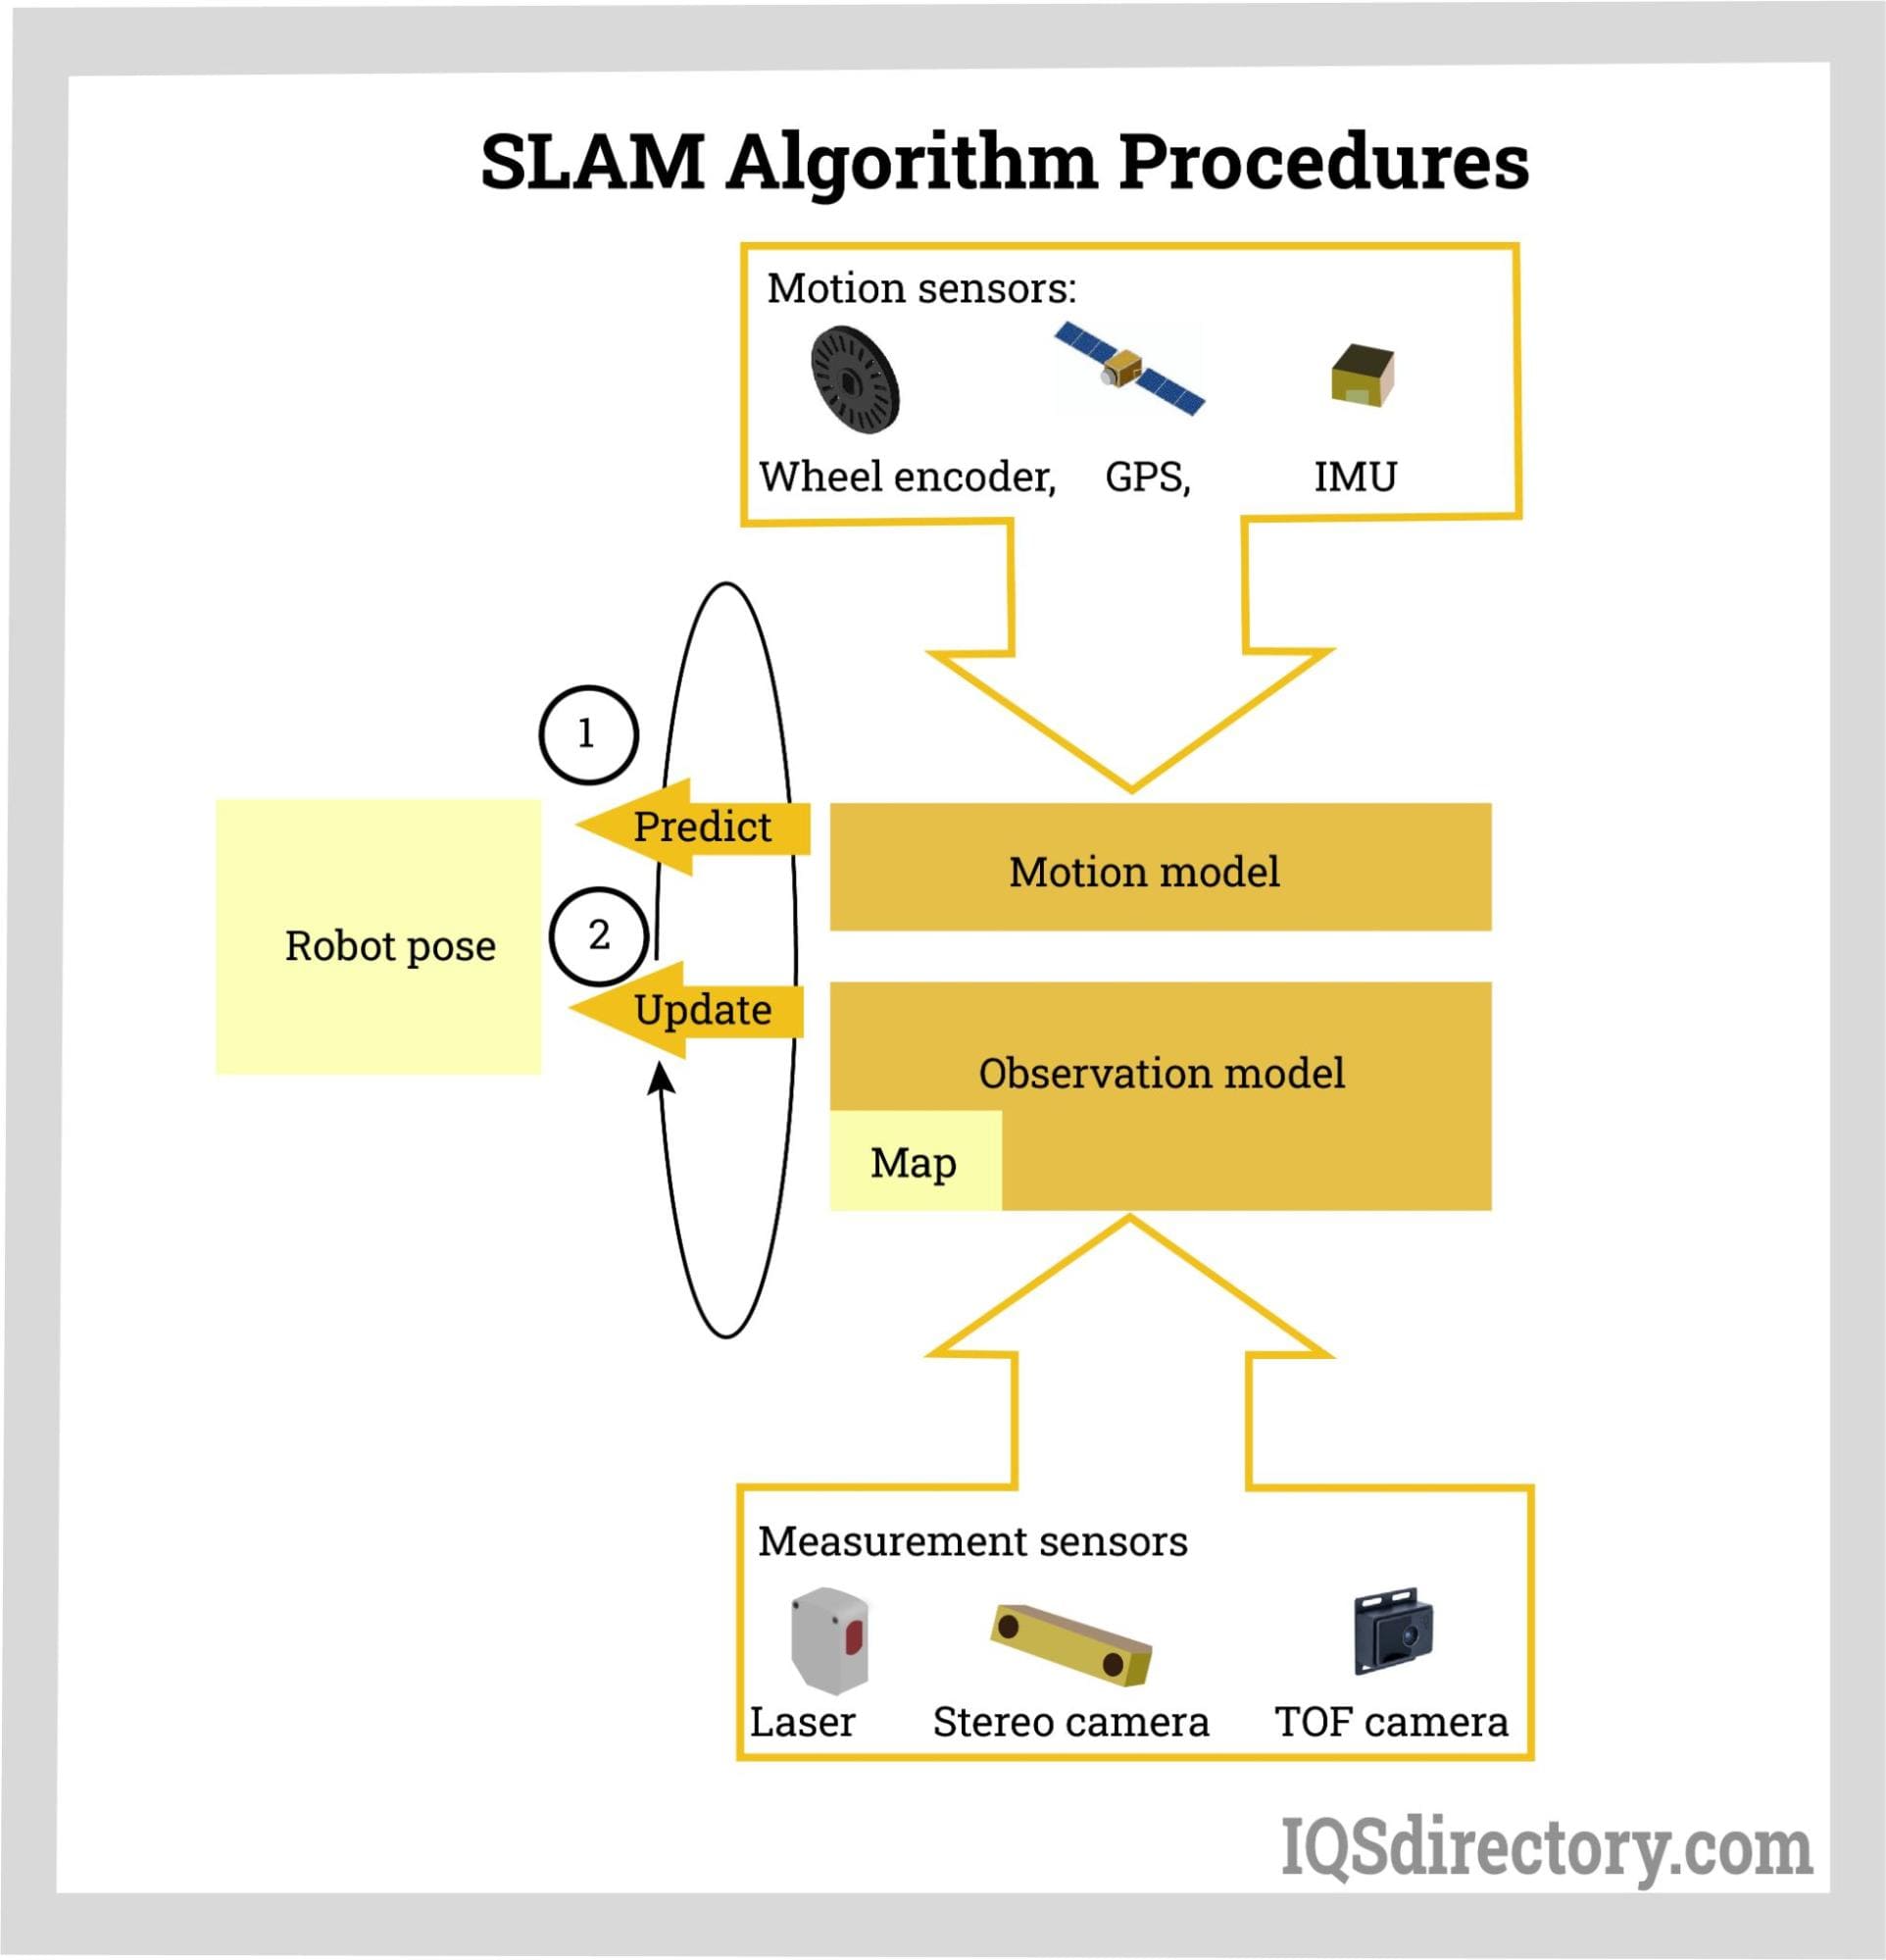 SLAM Algorithm Procedures